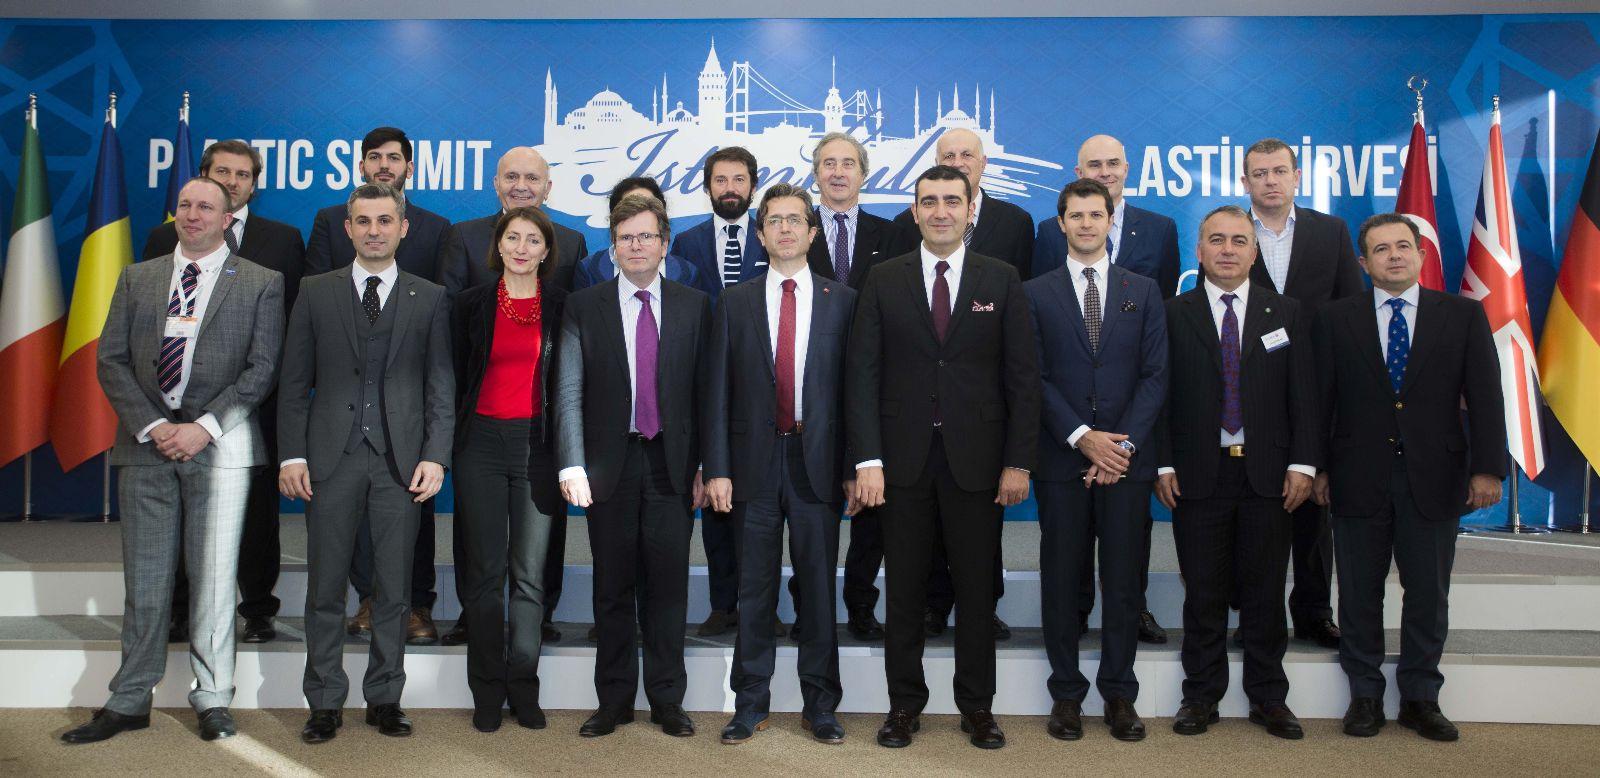 Istanbul Plastic Summit